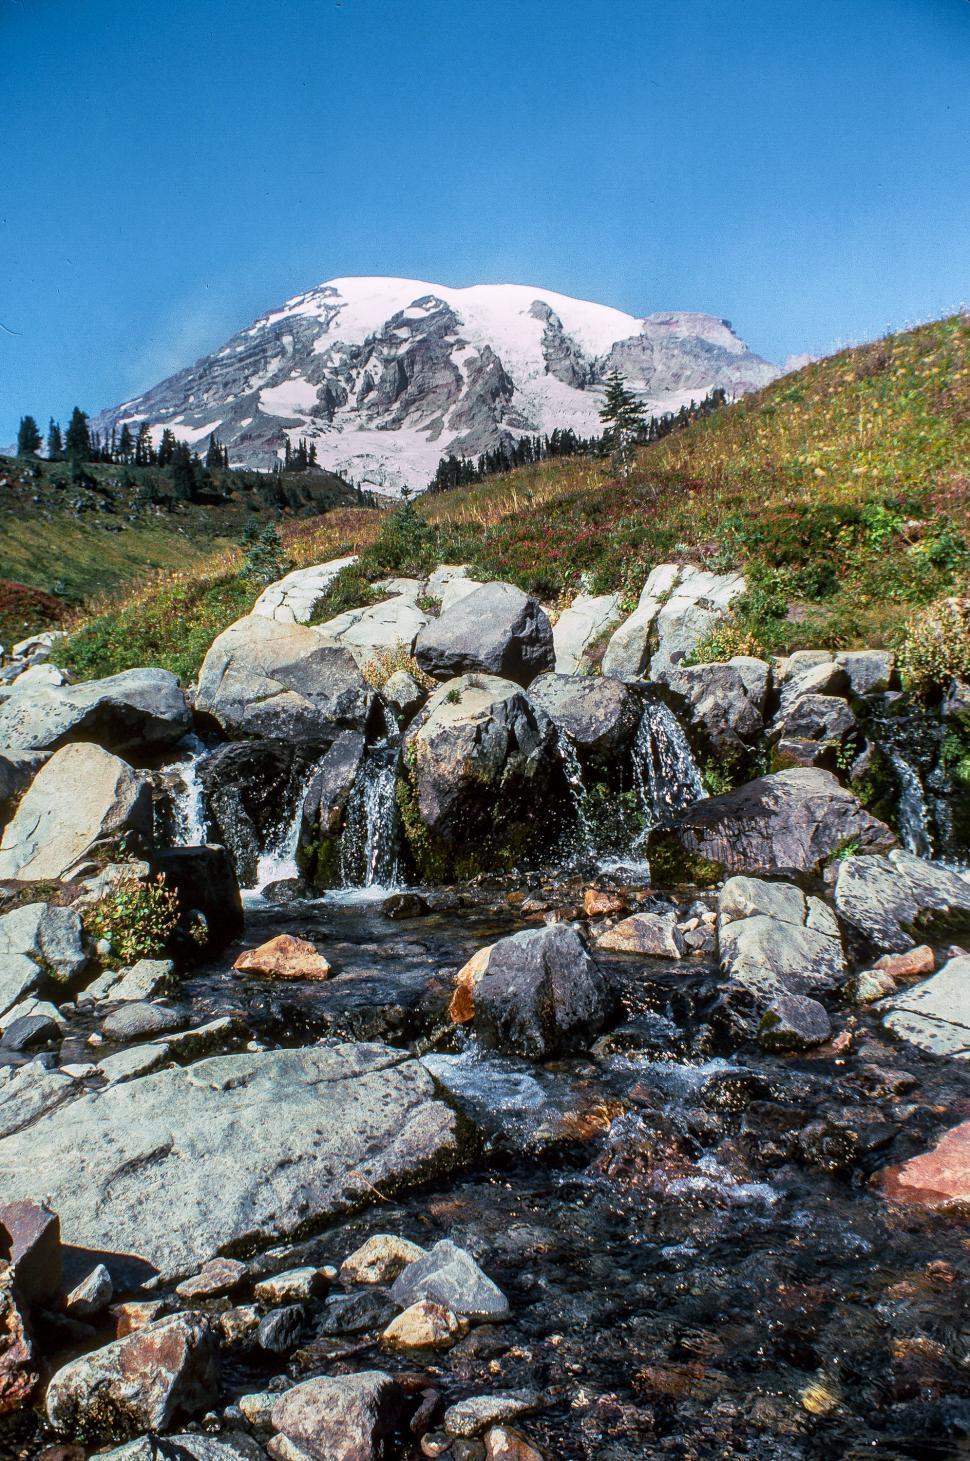 Free Image of Mount Rainier and stream 